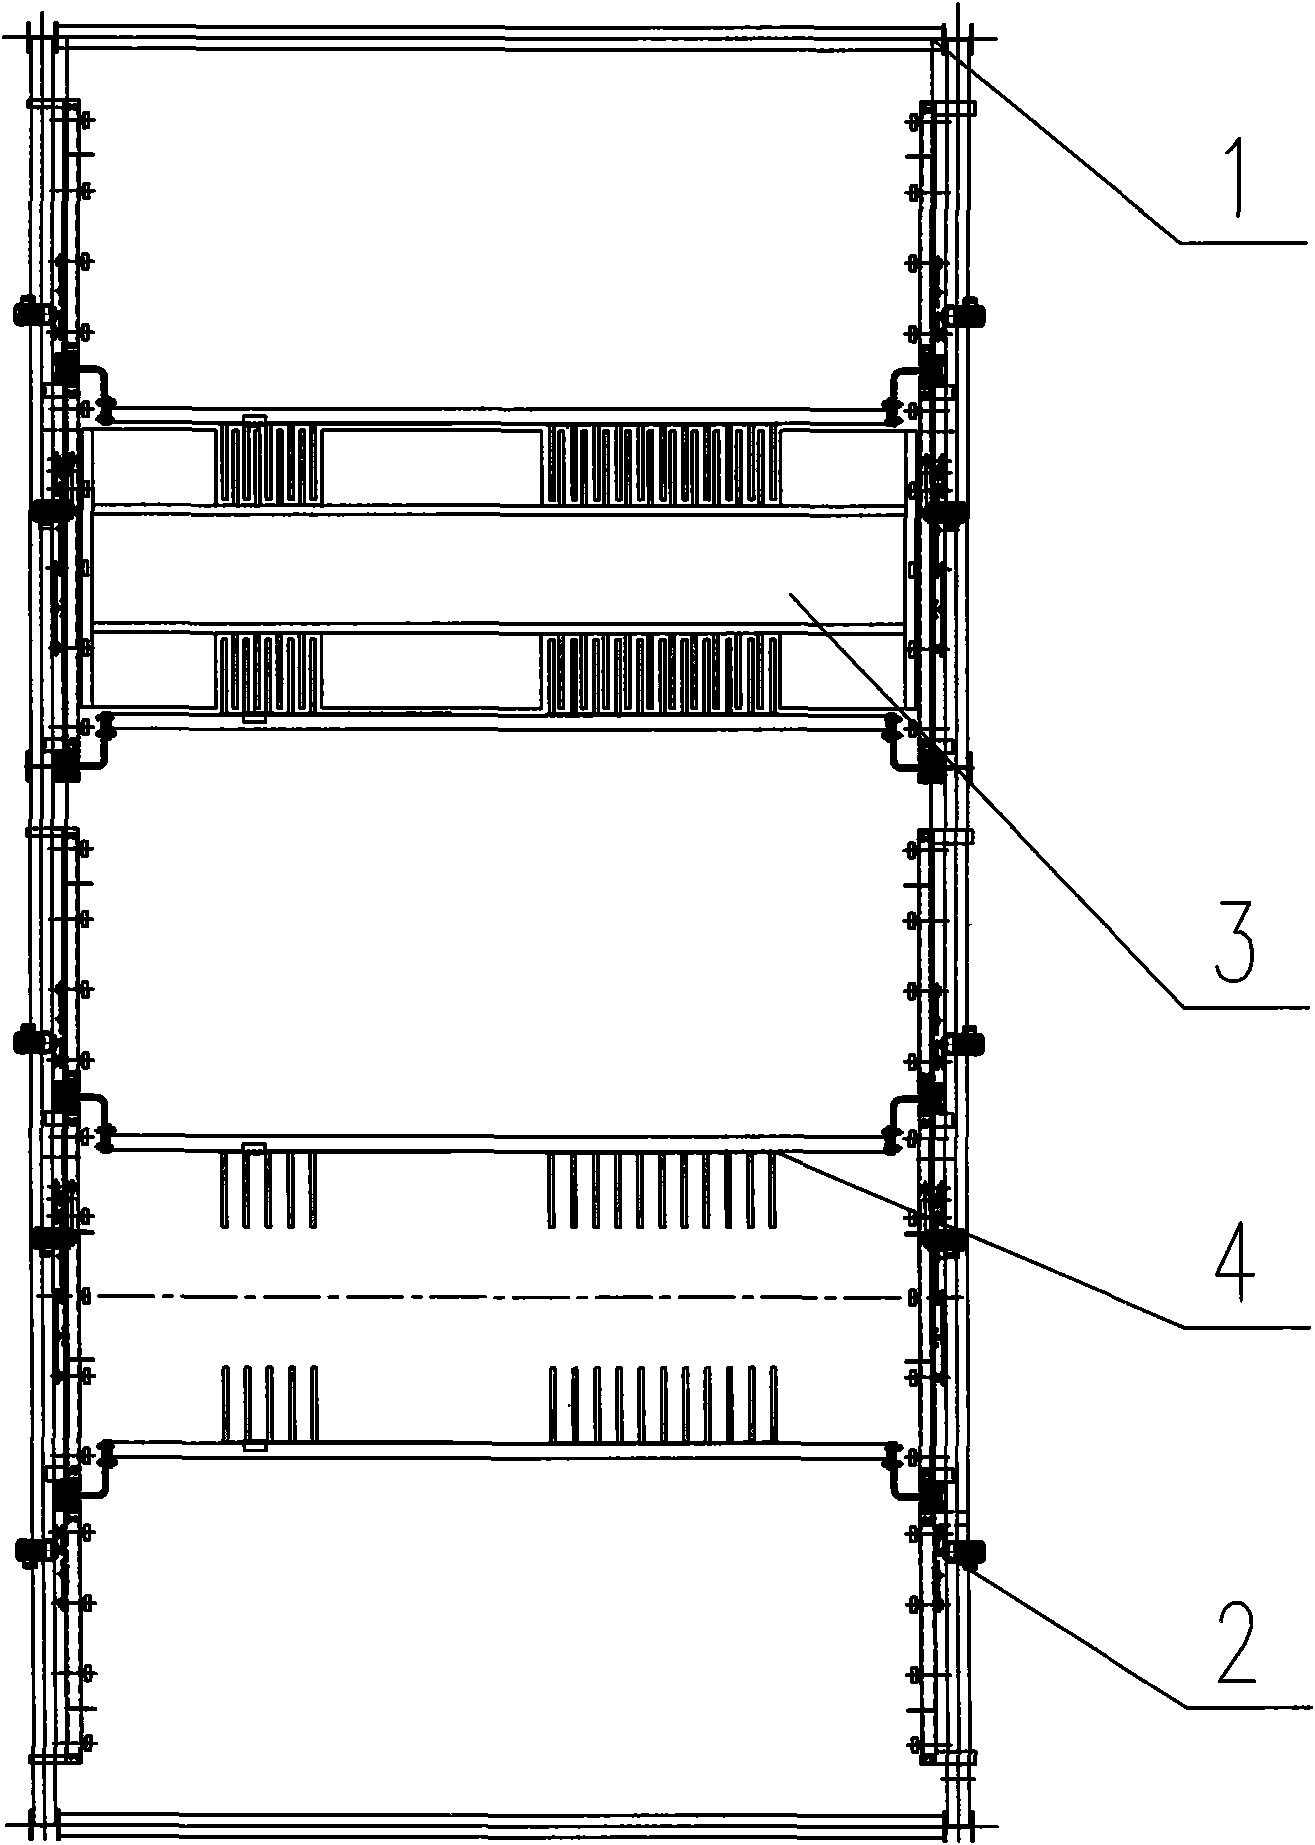 Vertical lift type parking equipment